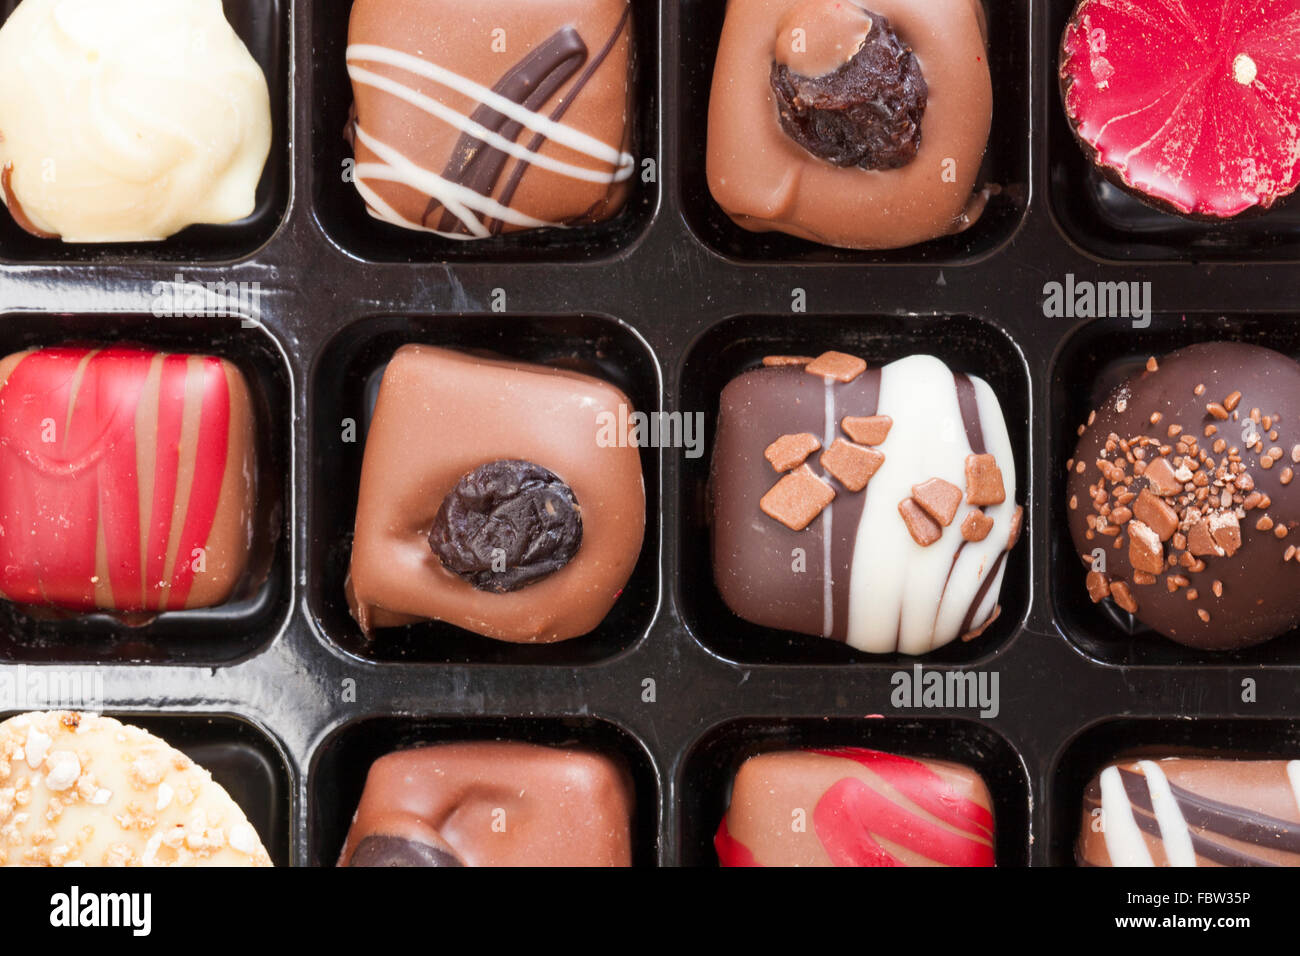 Opened box of Linden Lady luxury handmade chocolates showing contents Stock Photo